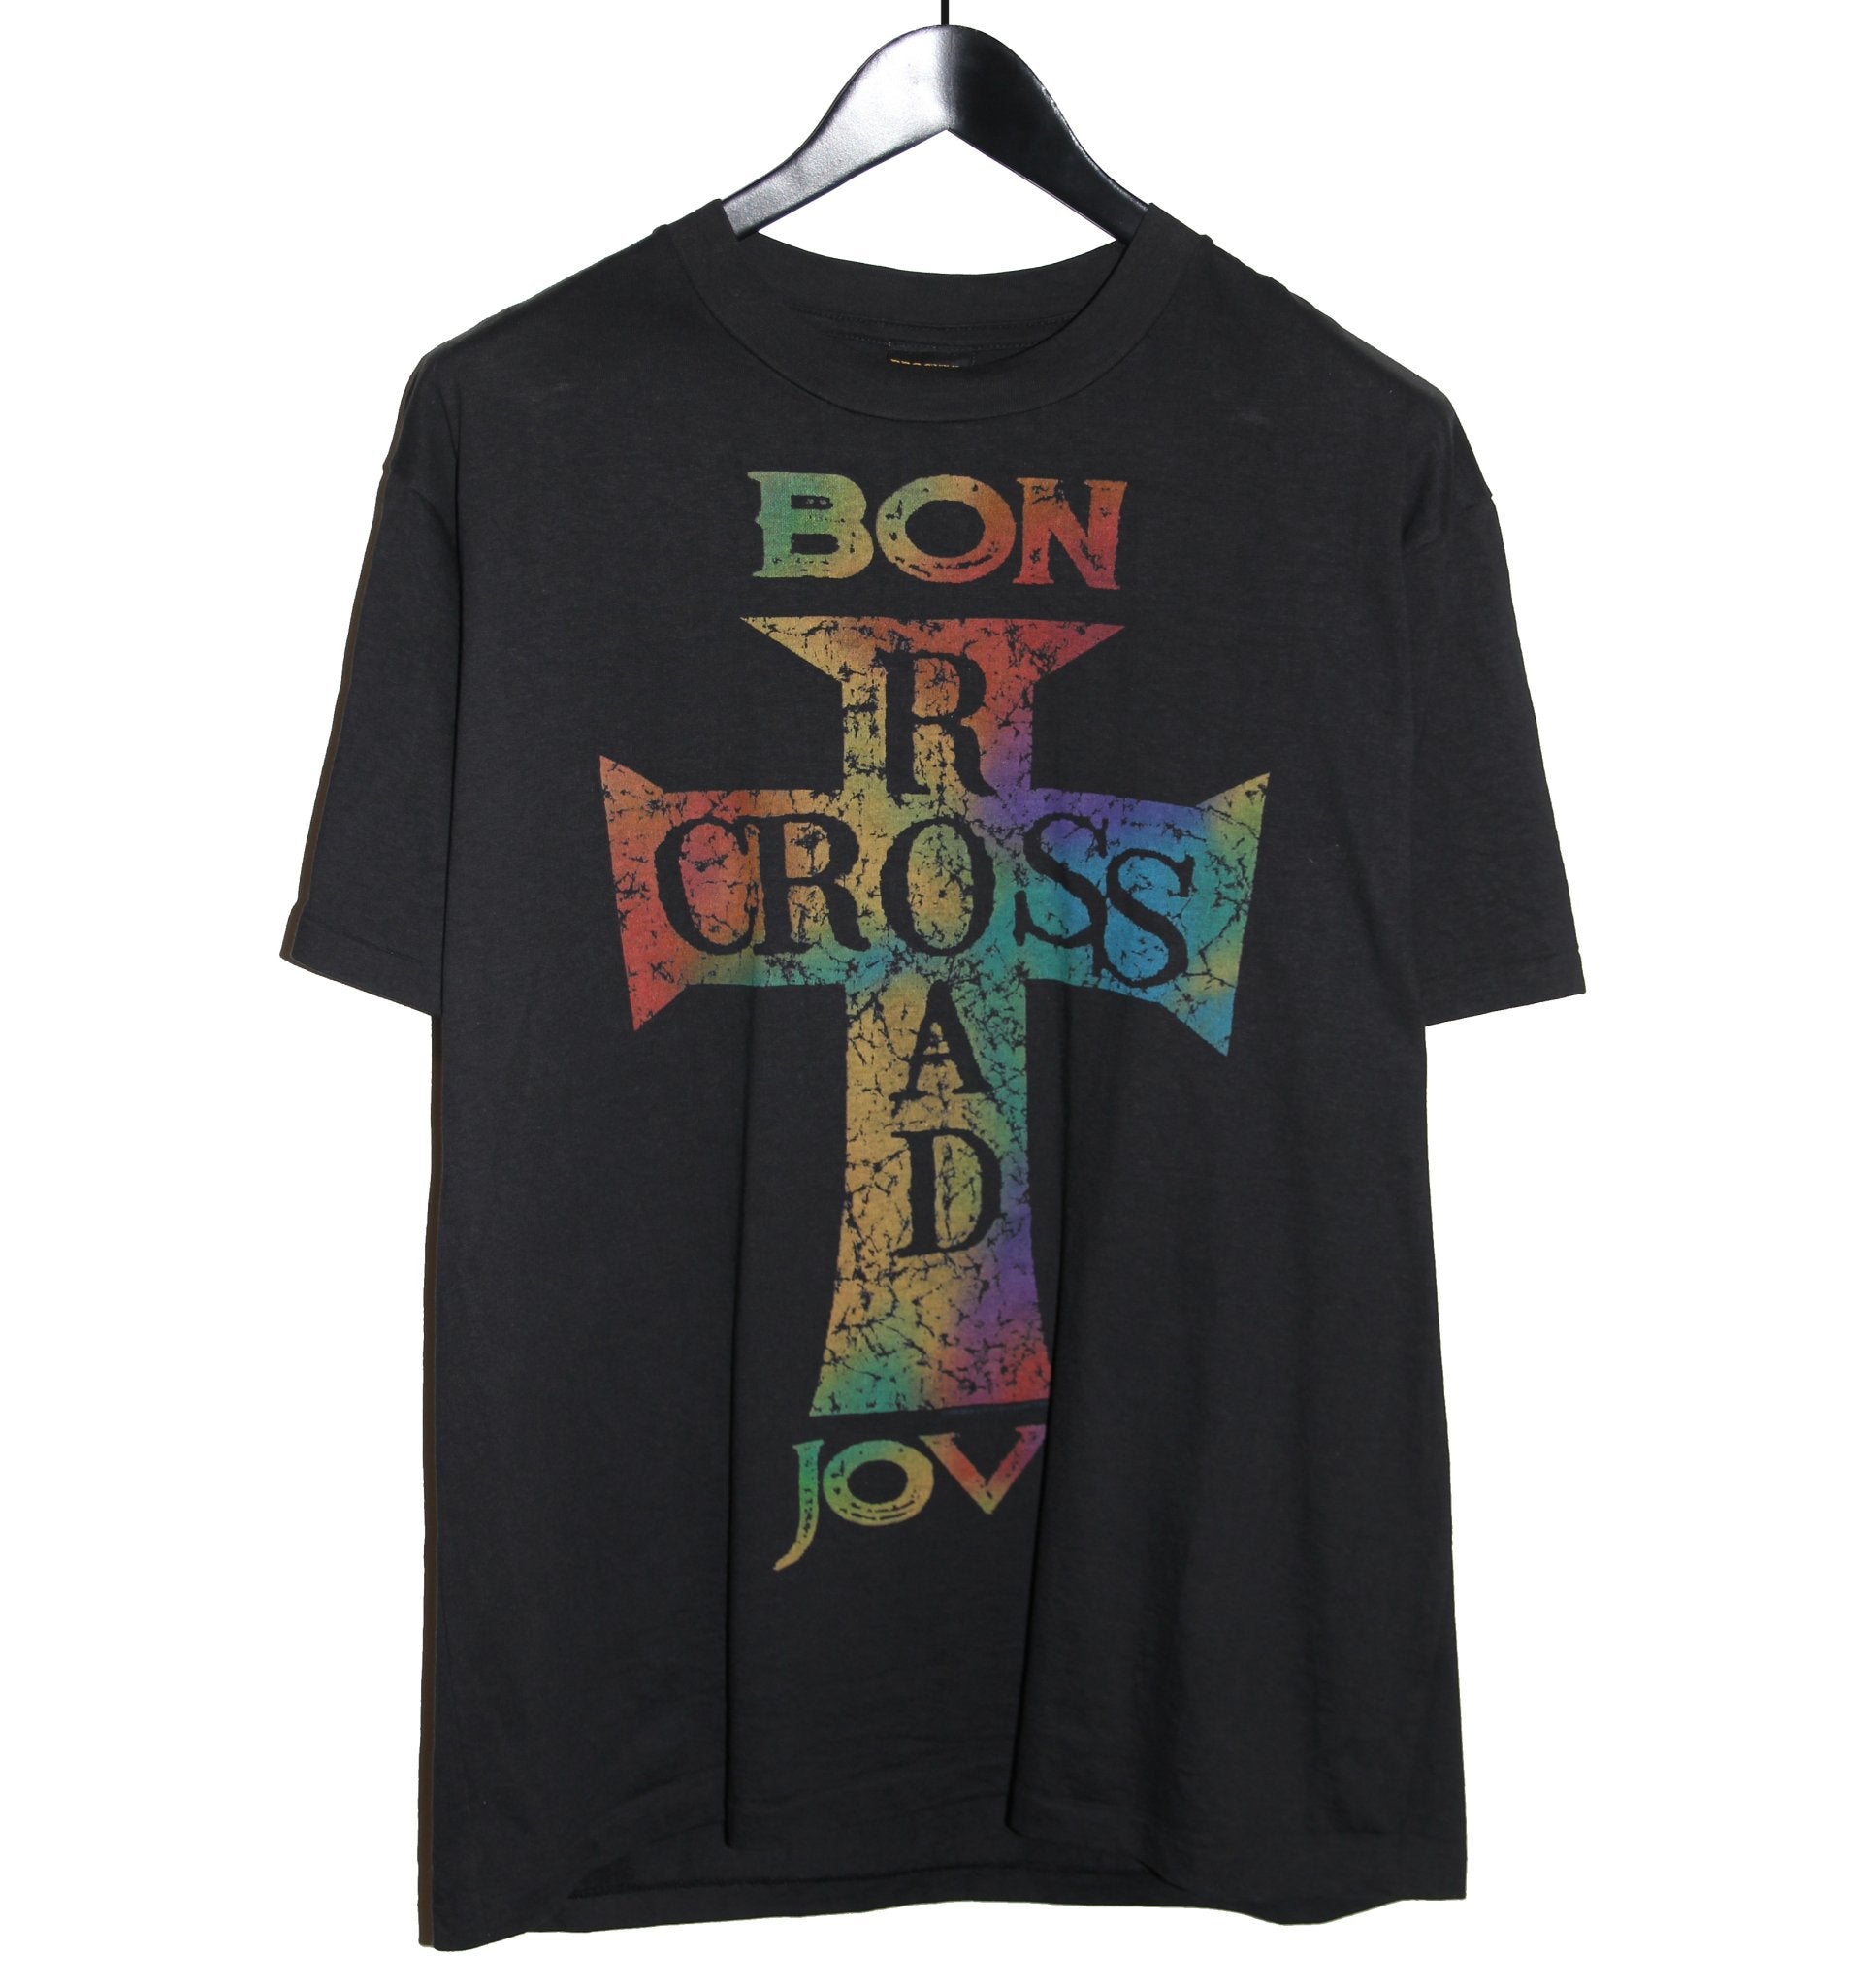 Bon Jovi 1994 Cross Road Album Shirt - Faded AU